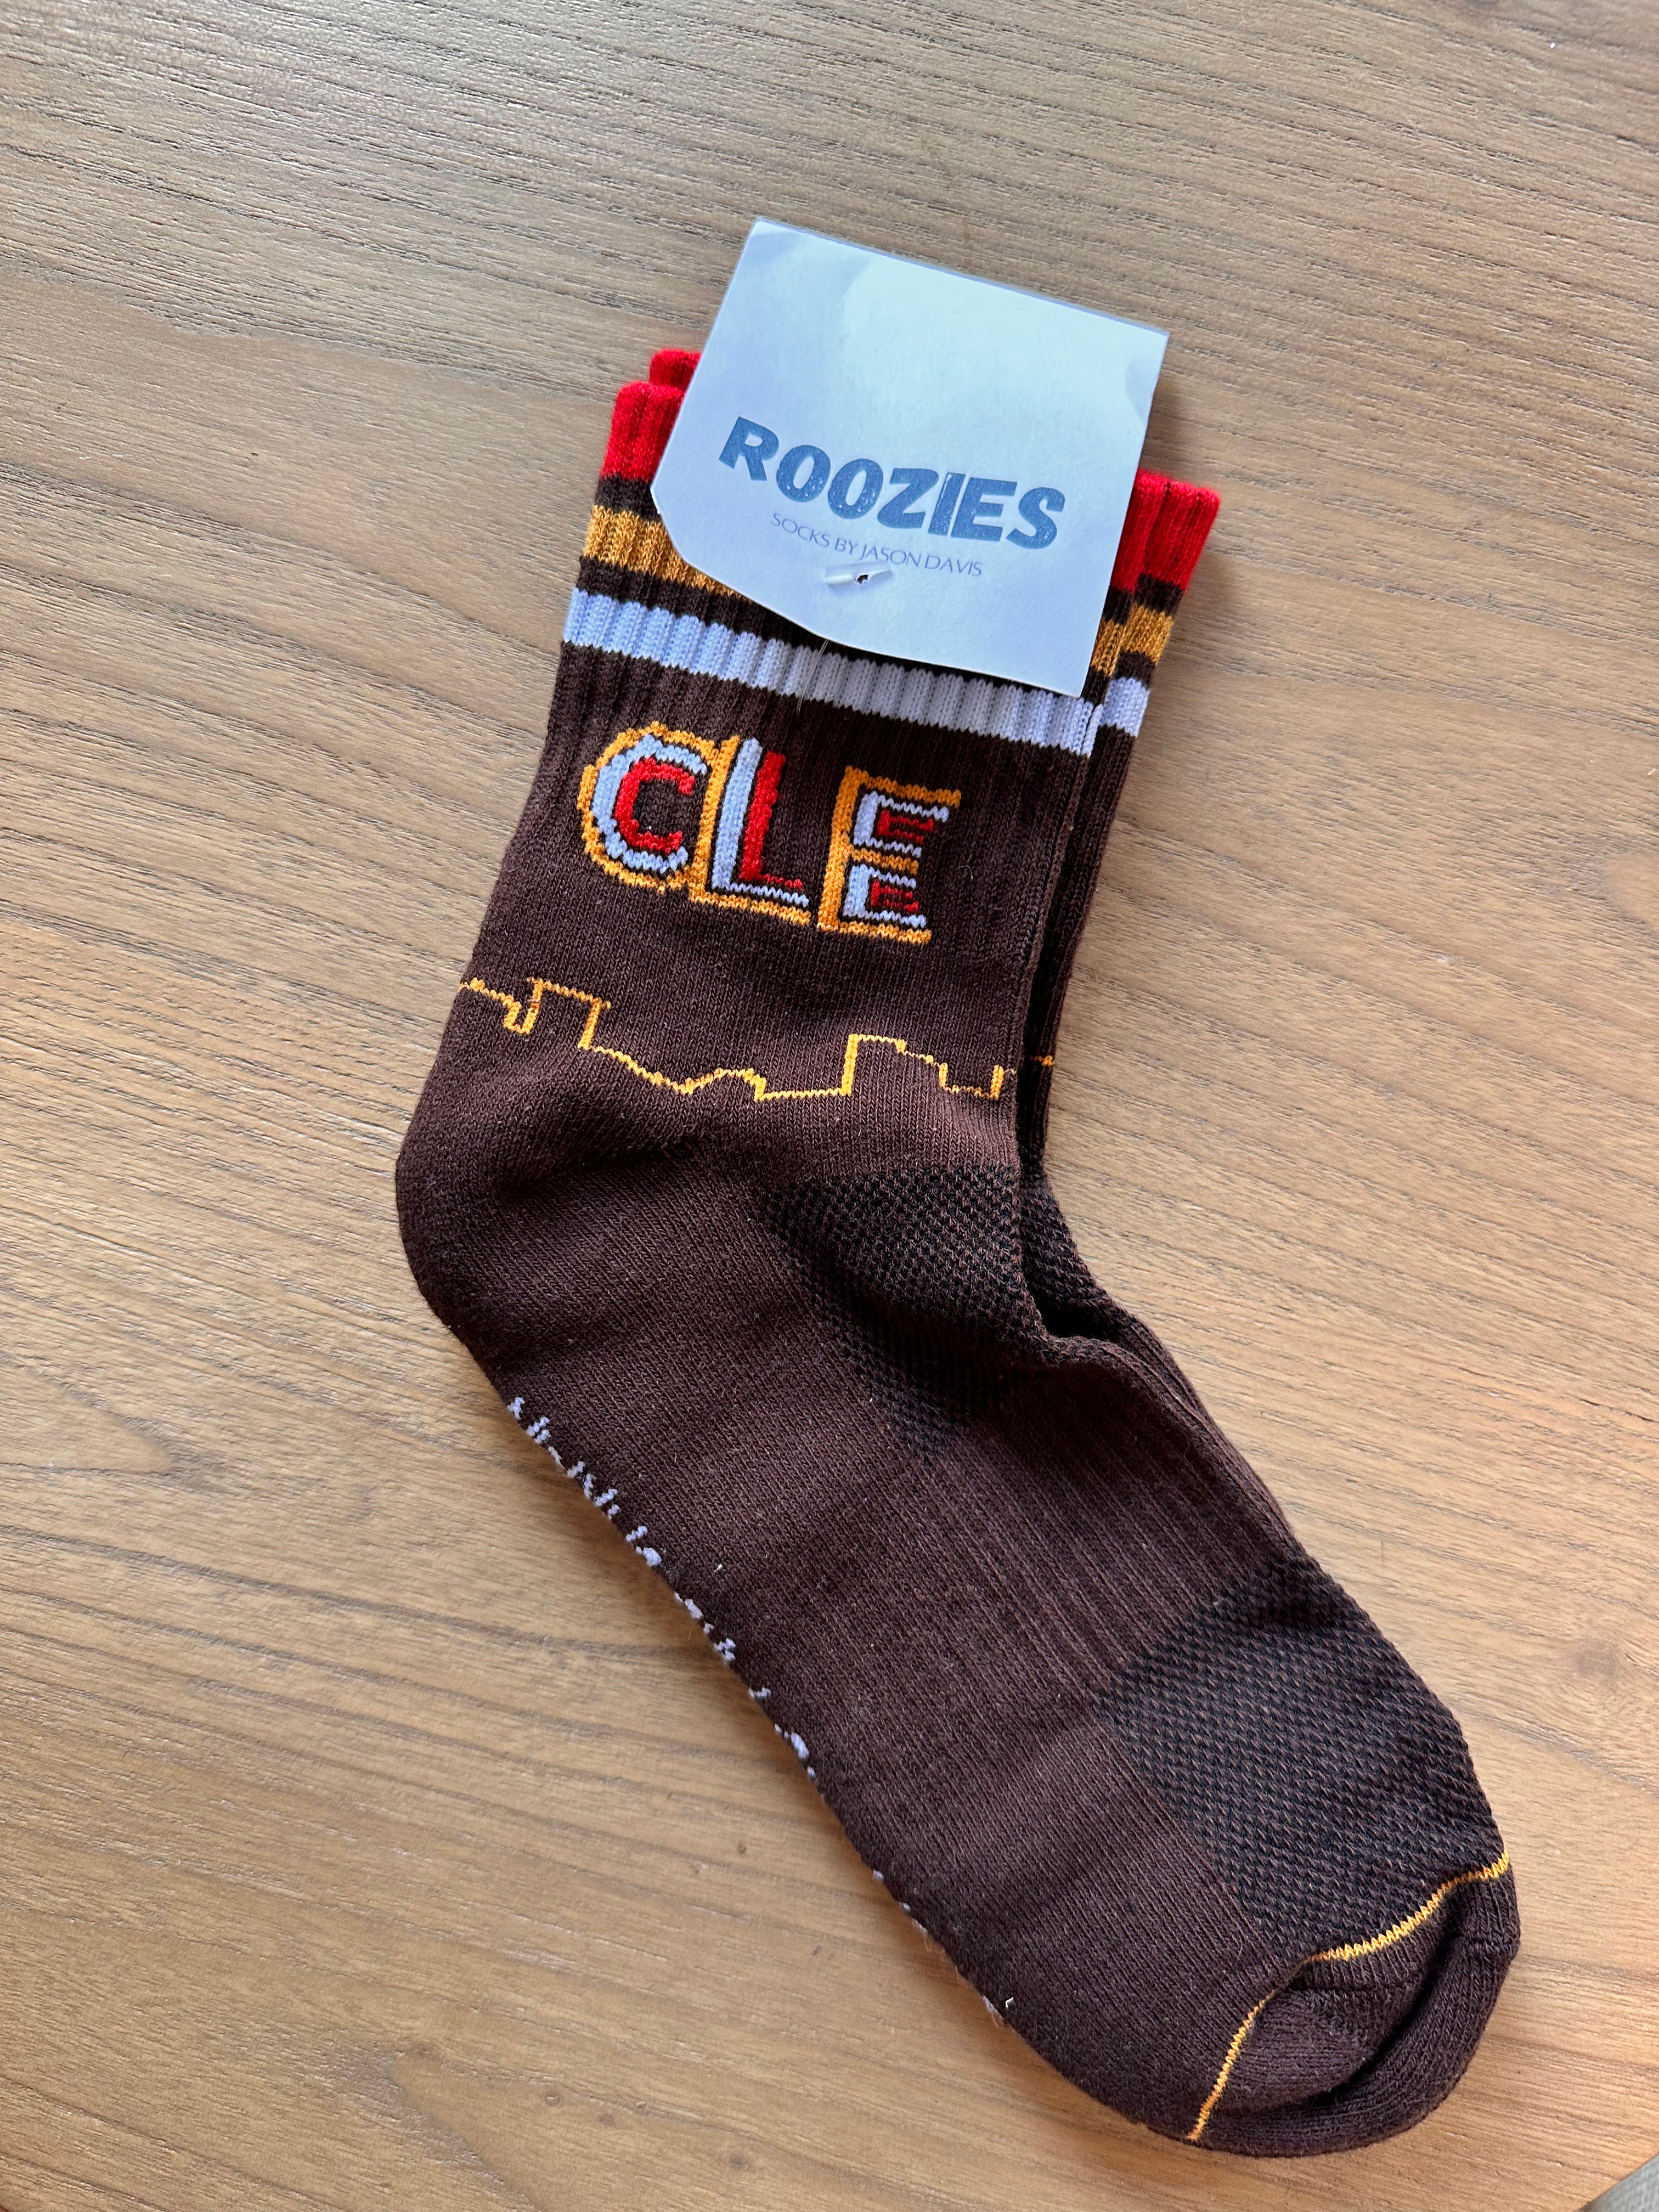 Cleveland Browns Ankle Socks